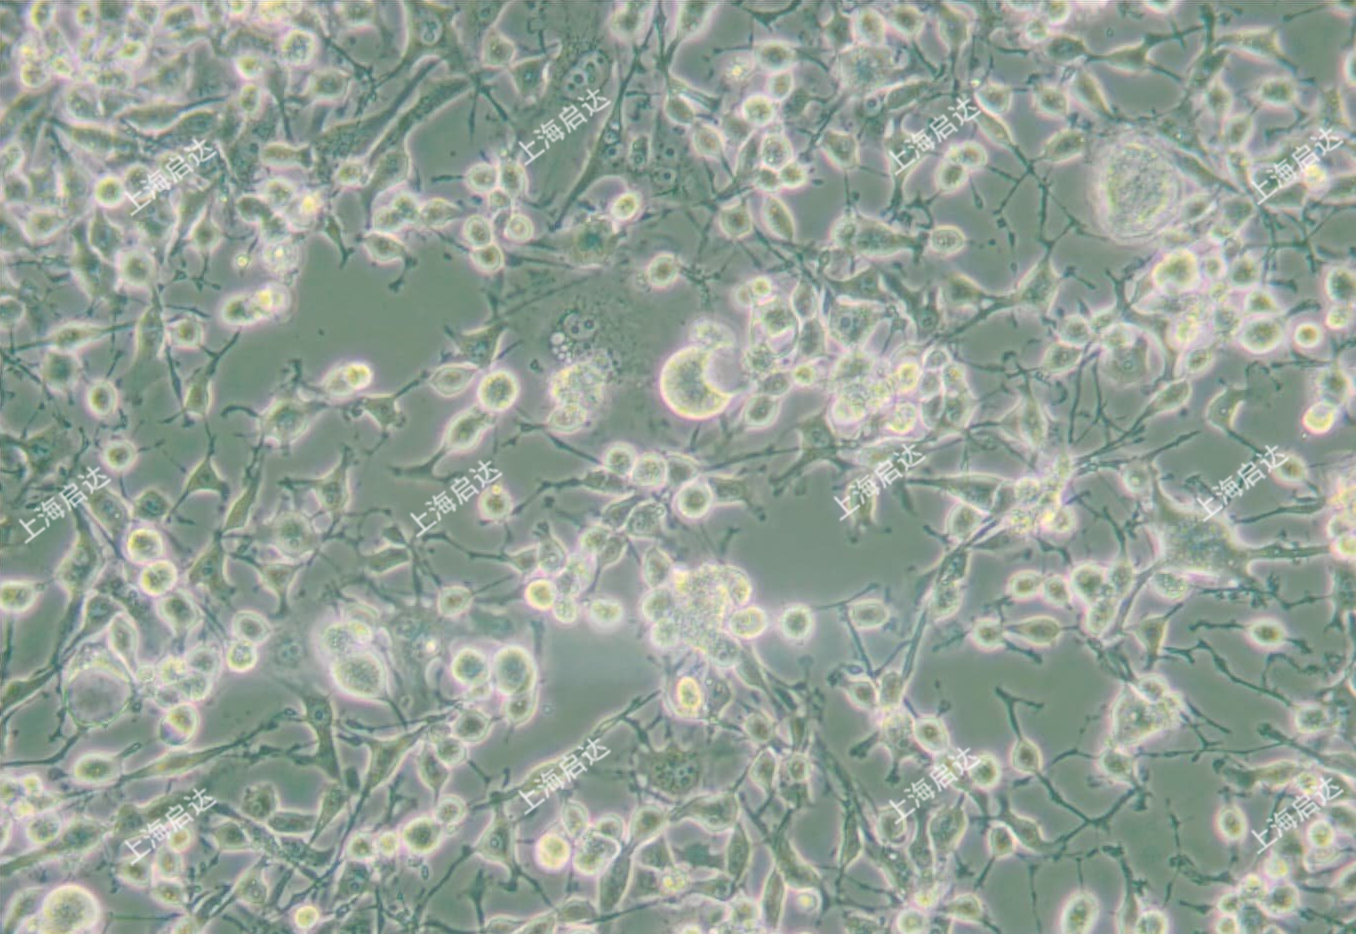 MDA-MB-436人乳腺腺癌细胞